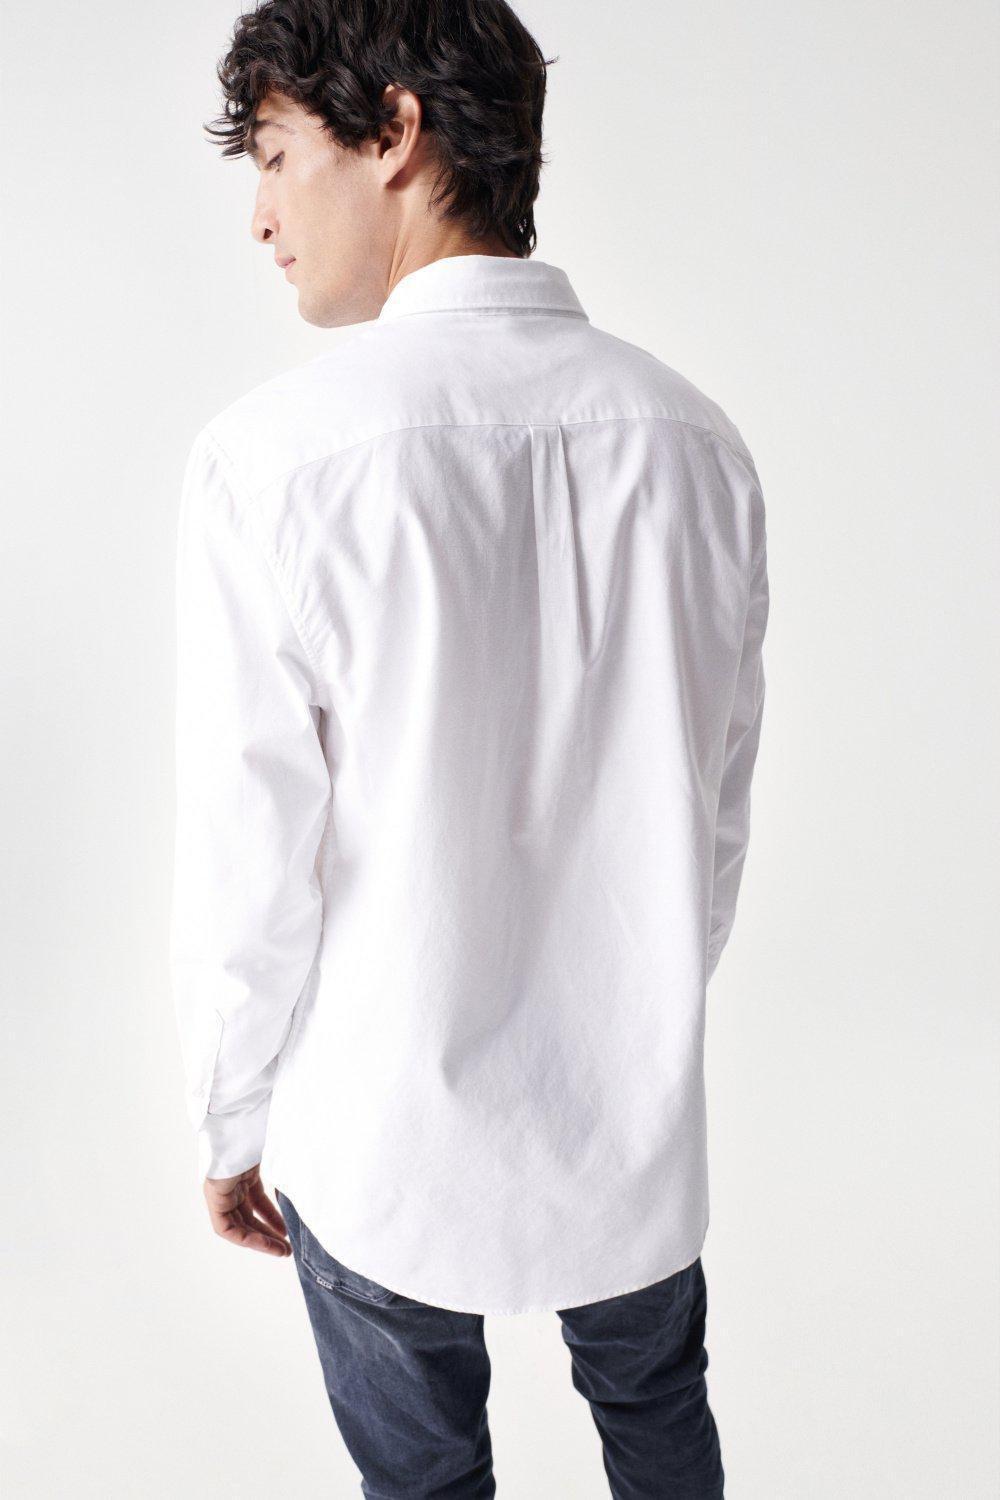 Salsa Jeans - White Regular Fit Oxford Shirt